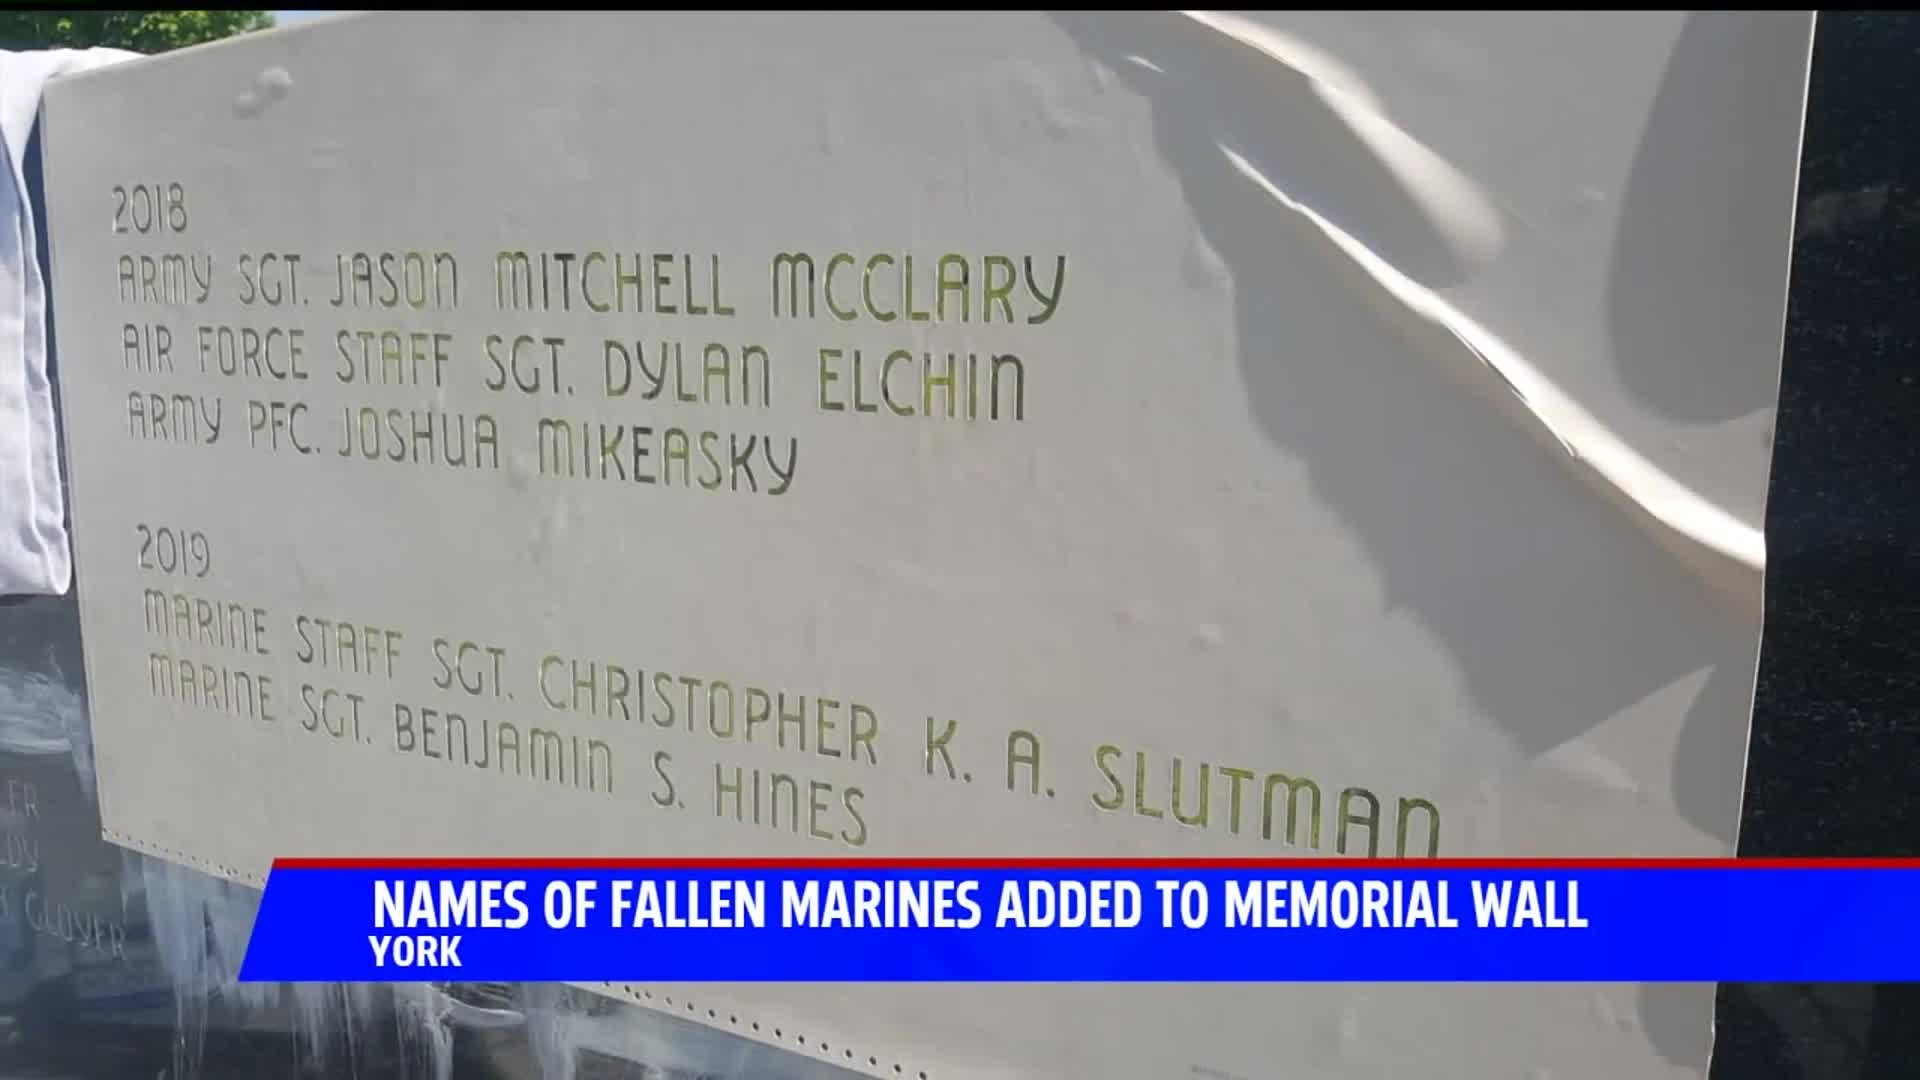 Staff Sgts. Benjamin Hines, Christopher Slutman among five names added to Veterans Memorial Wall